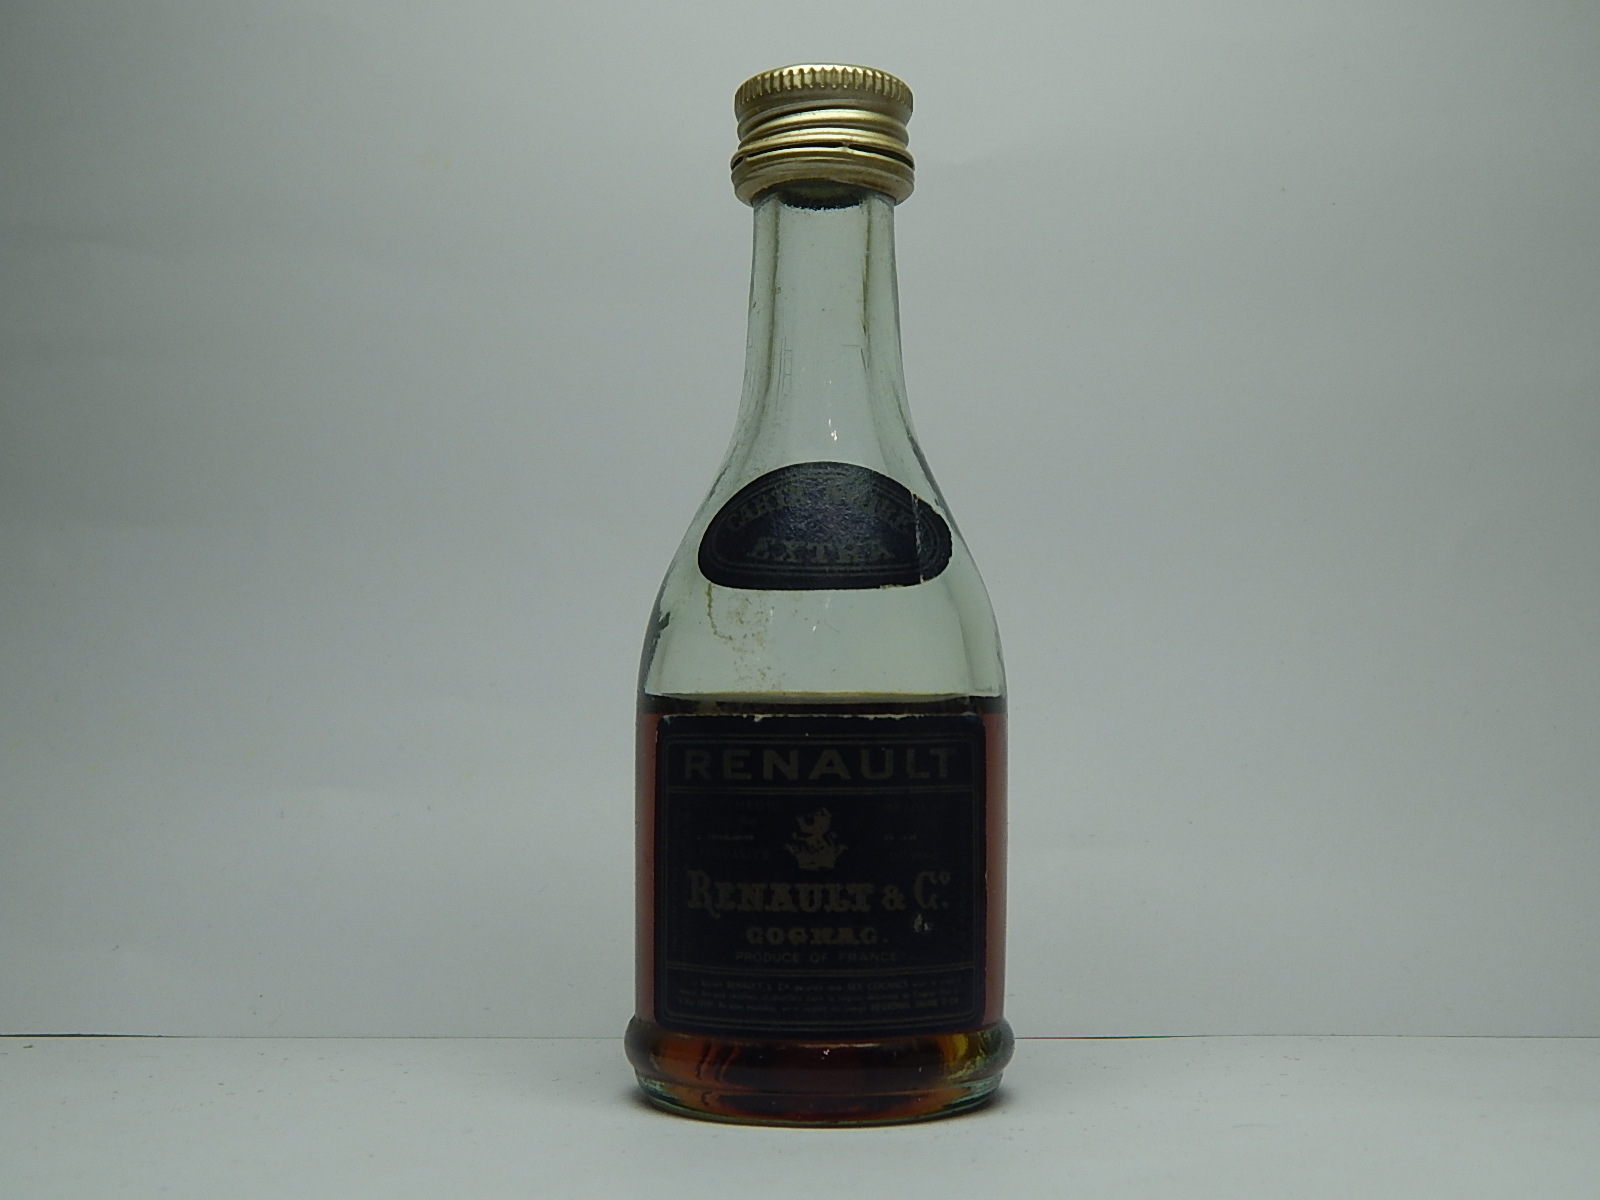 50.RENAULT Extra Cognac